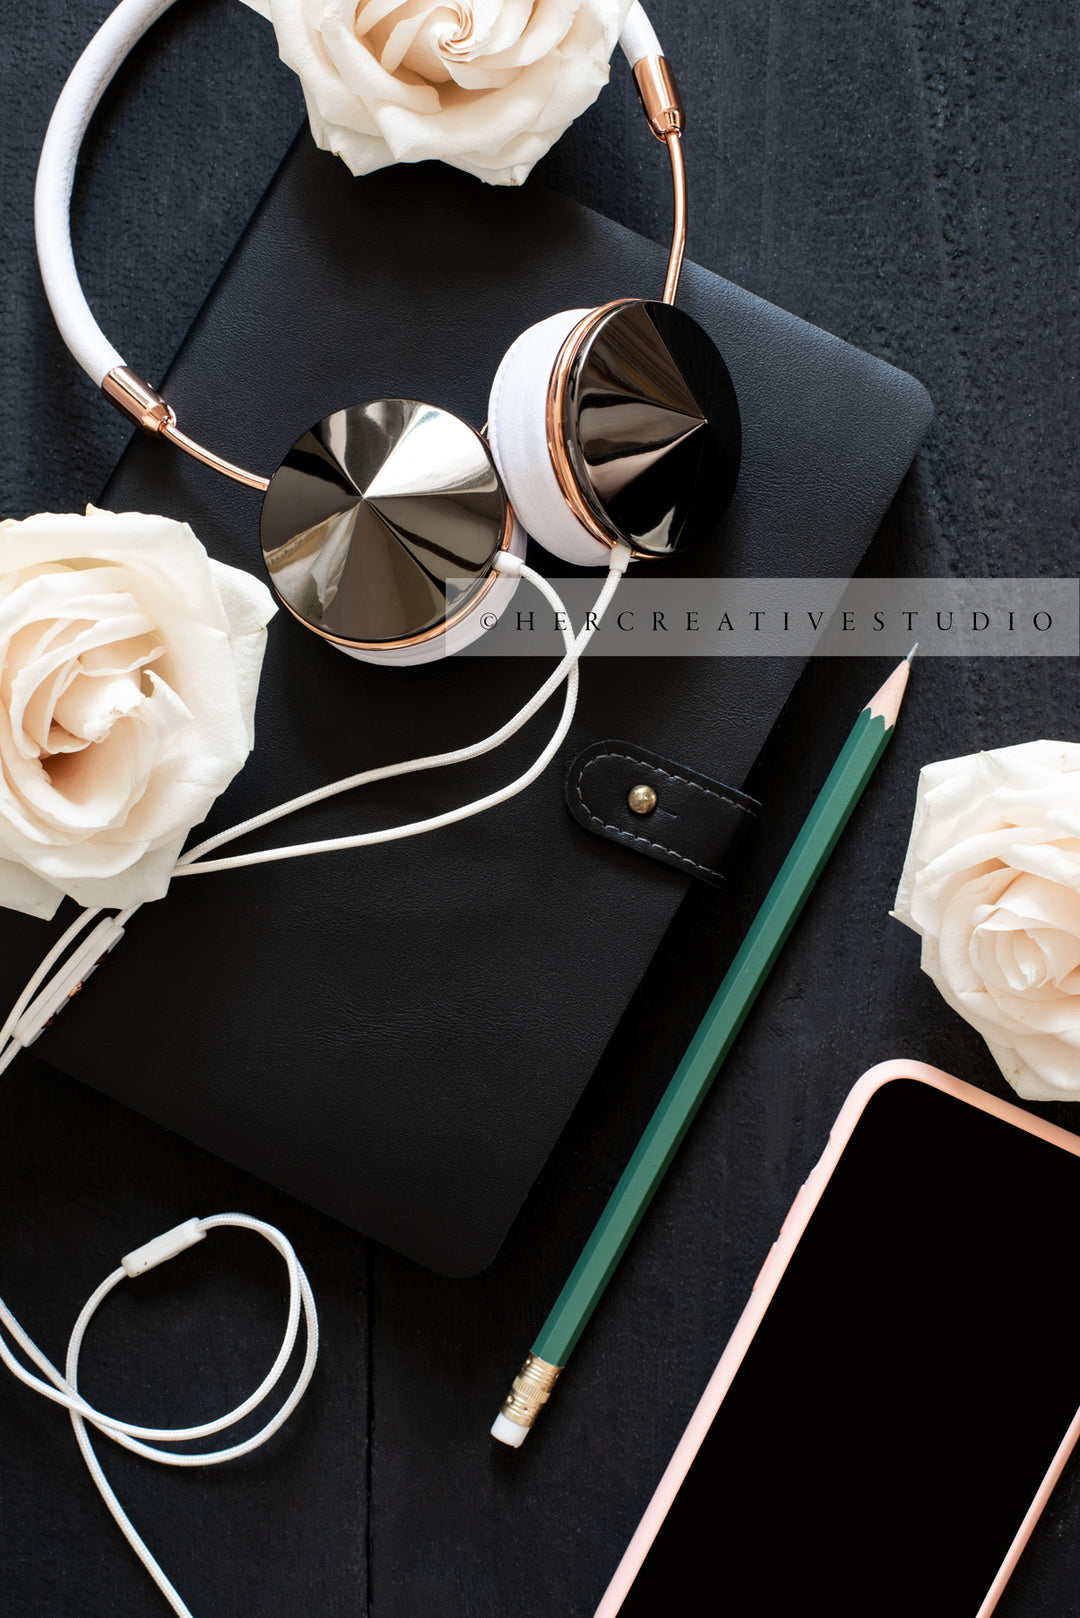 Headphones, Smartphone & Roses on Black Desk